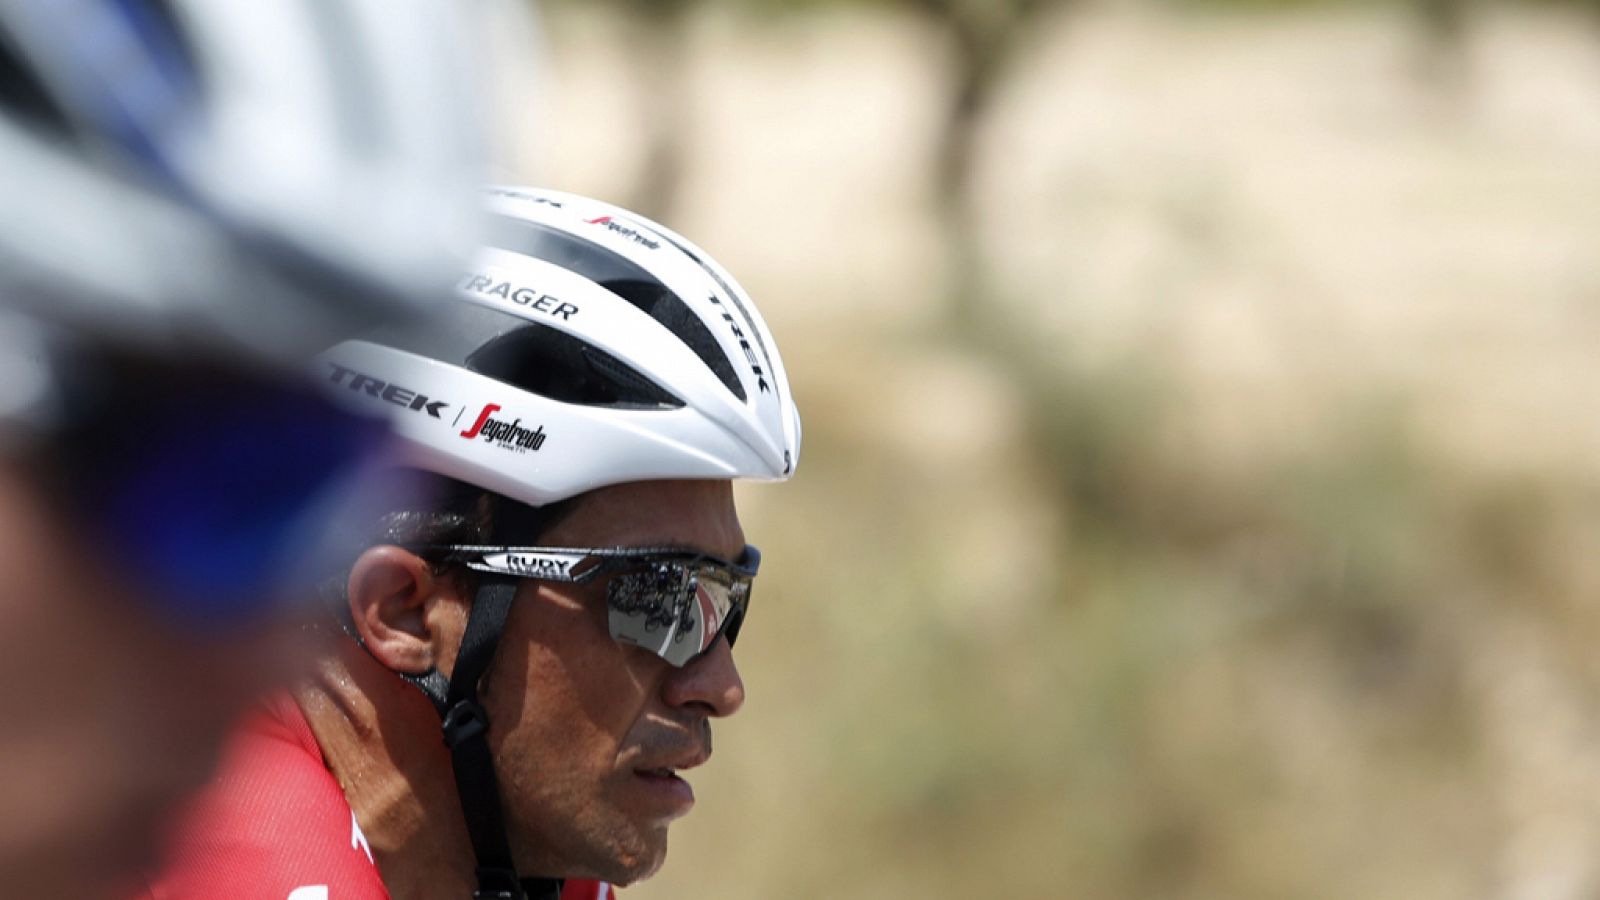 Vuelta ciclista a España: Vuelta 2017 | Contador: "Me ha faltado chispa en la rampa final" de Cumbre del Sol | RTVE Play